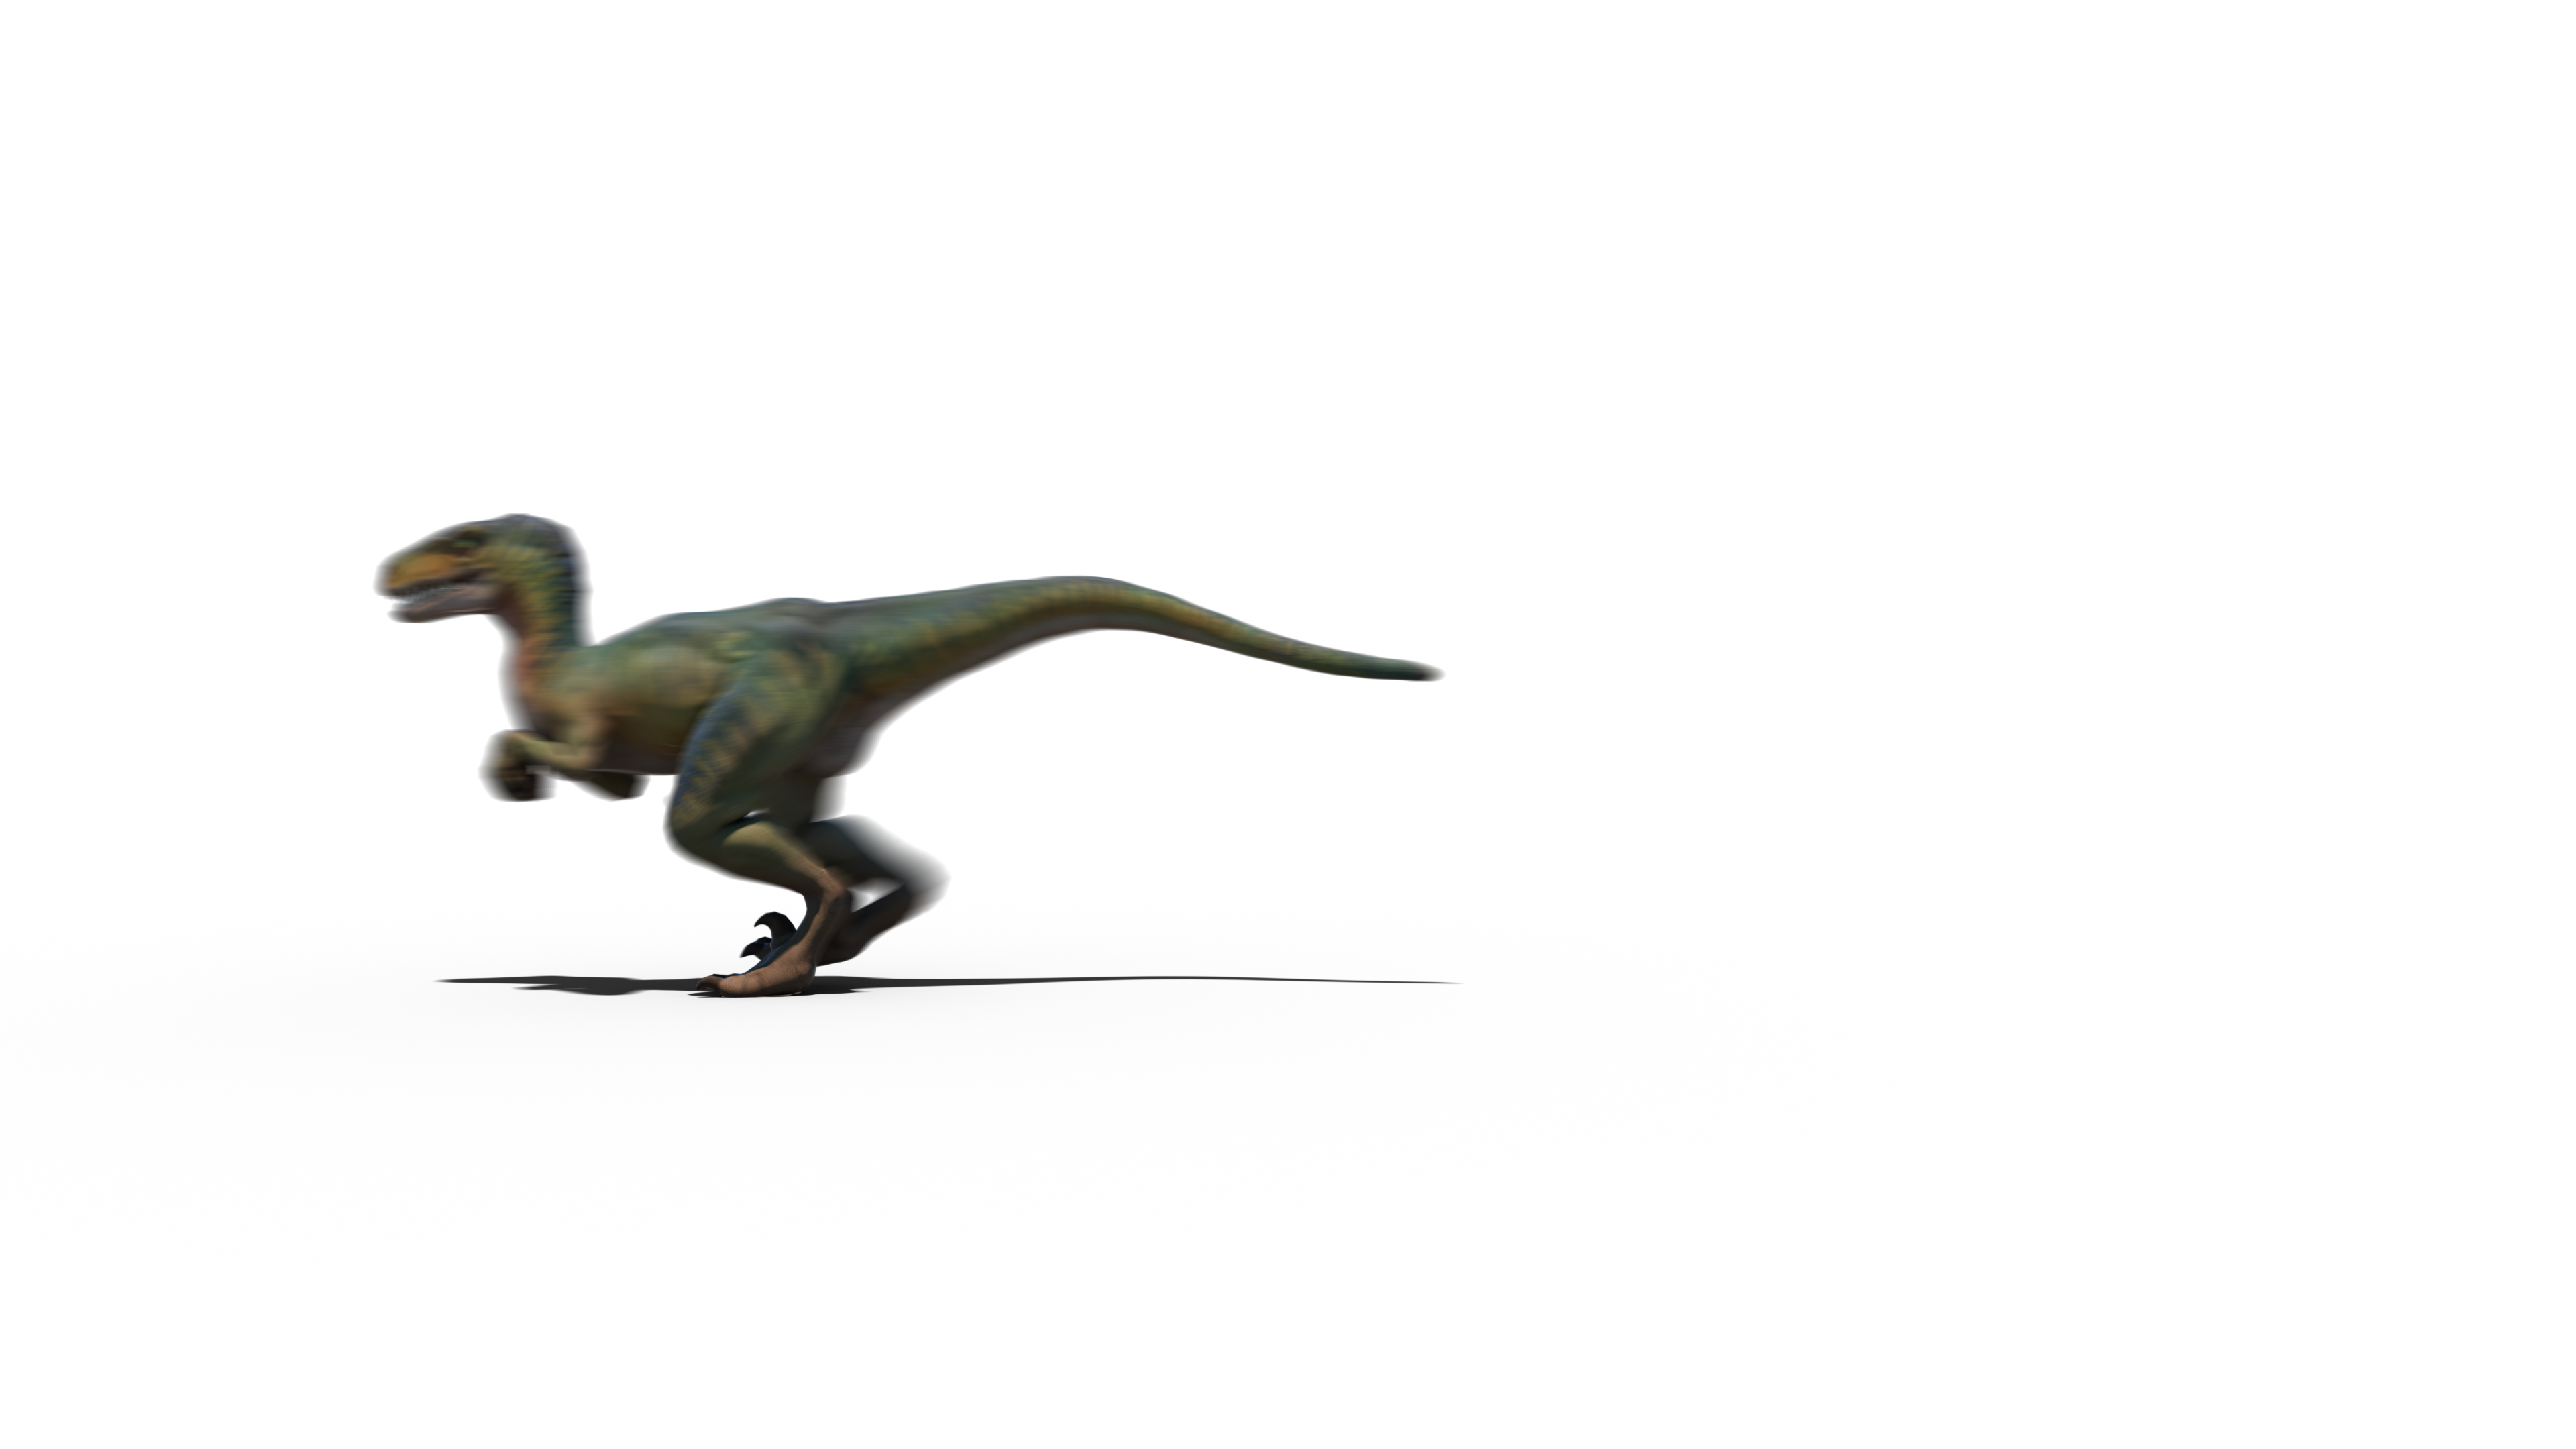 Looping Velociraptor Running Angle 1 Effect